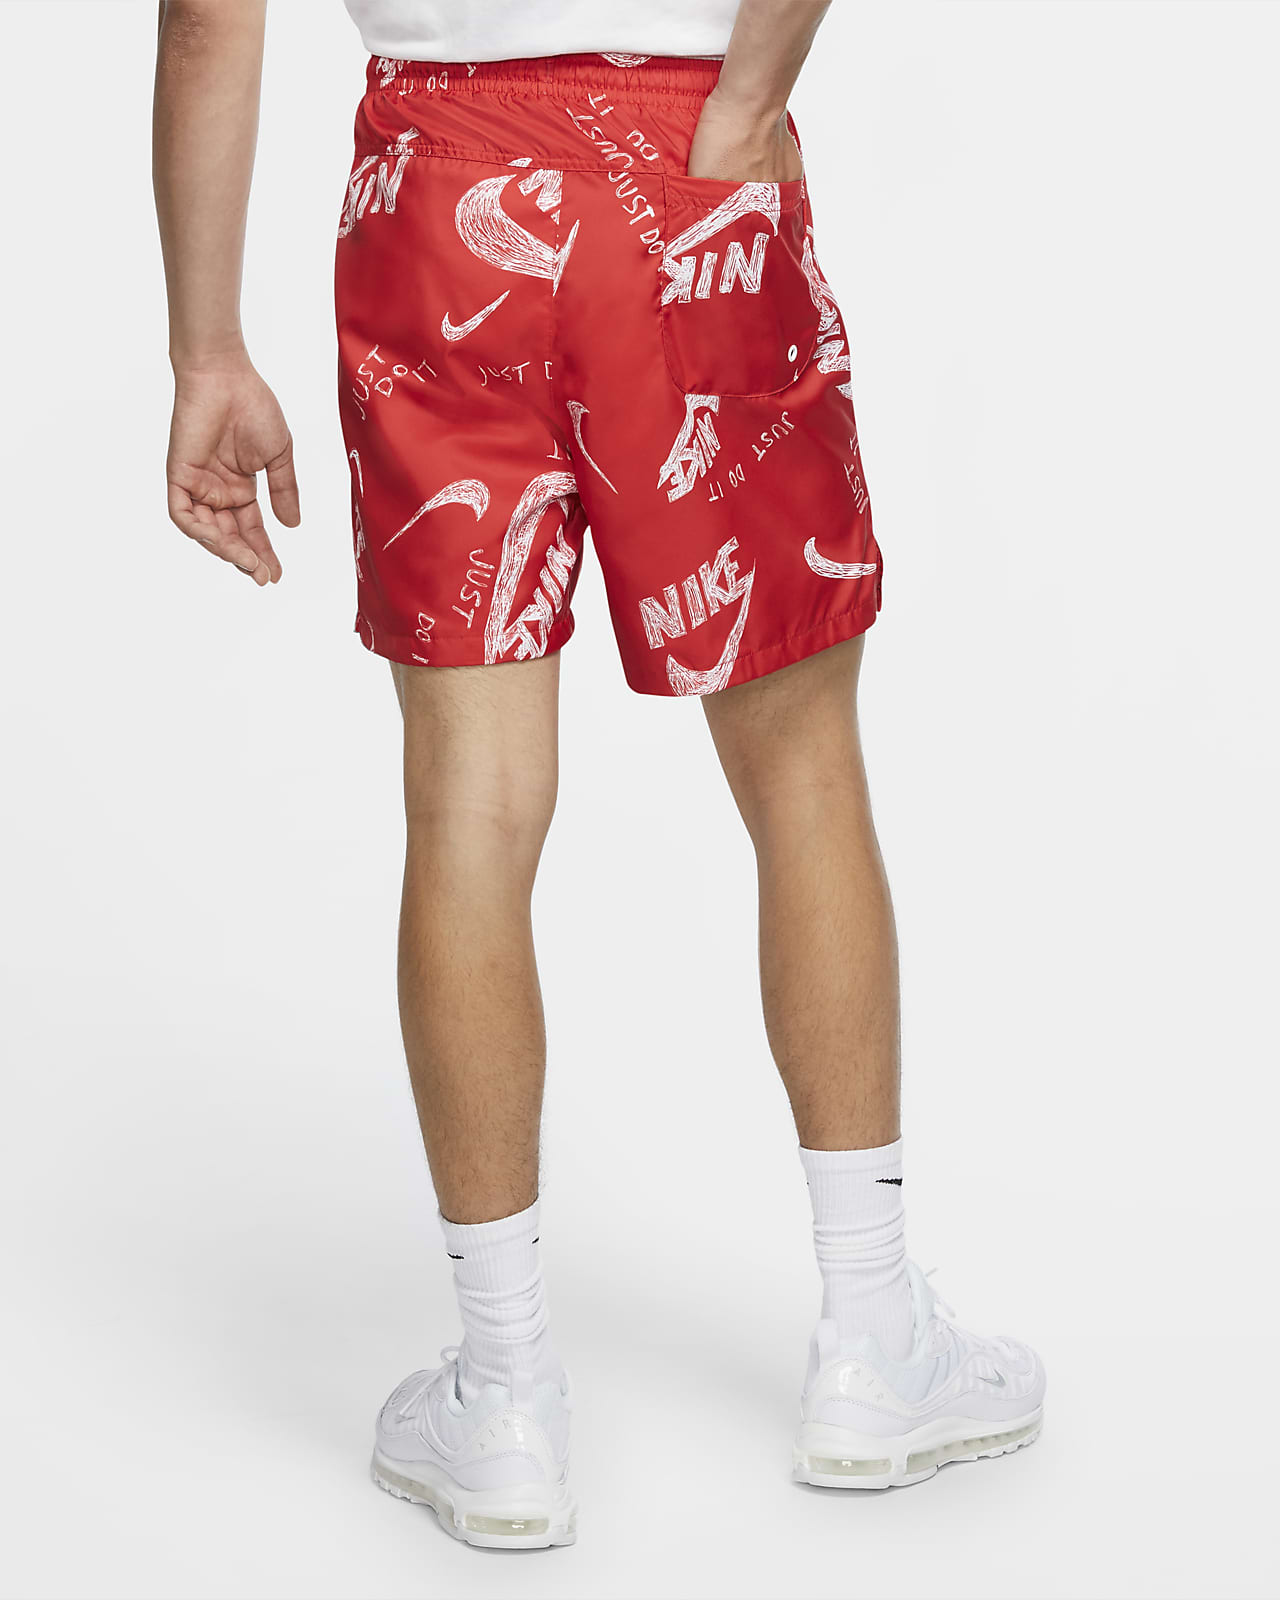 Nike Sportswear Men's Print Shorts 